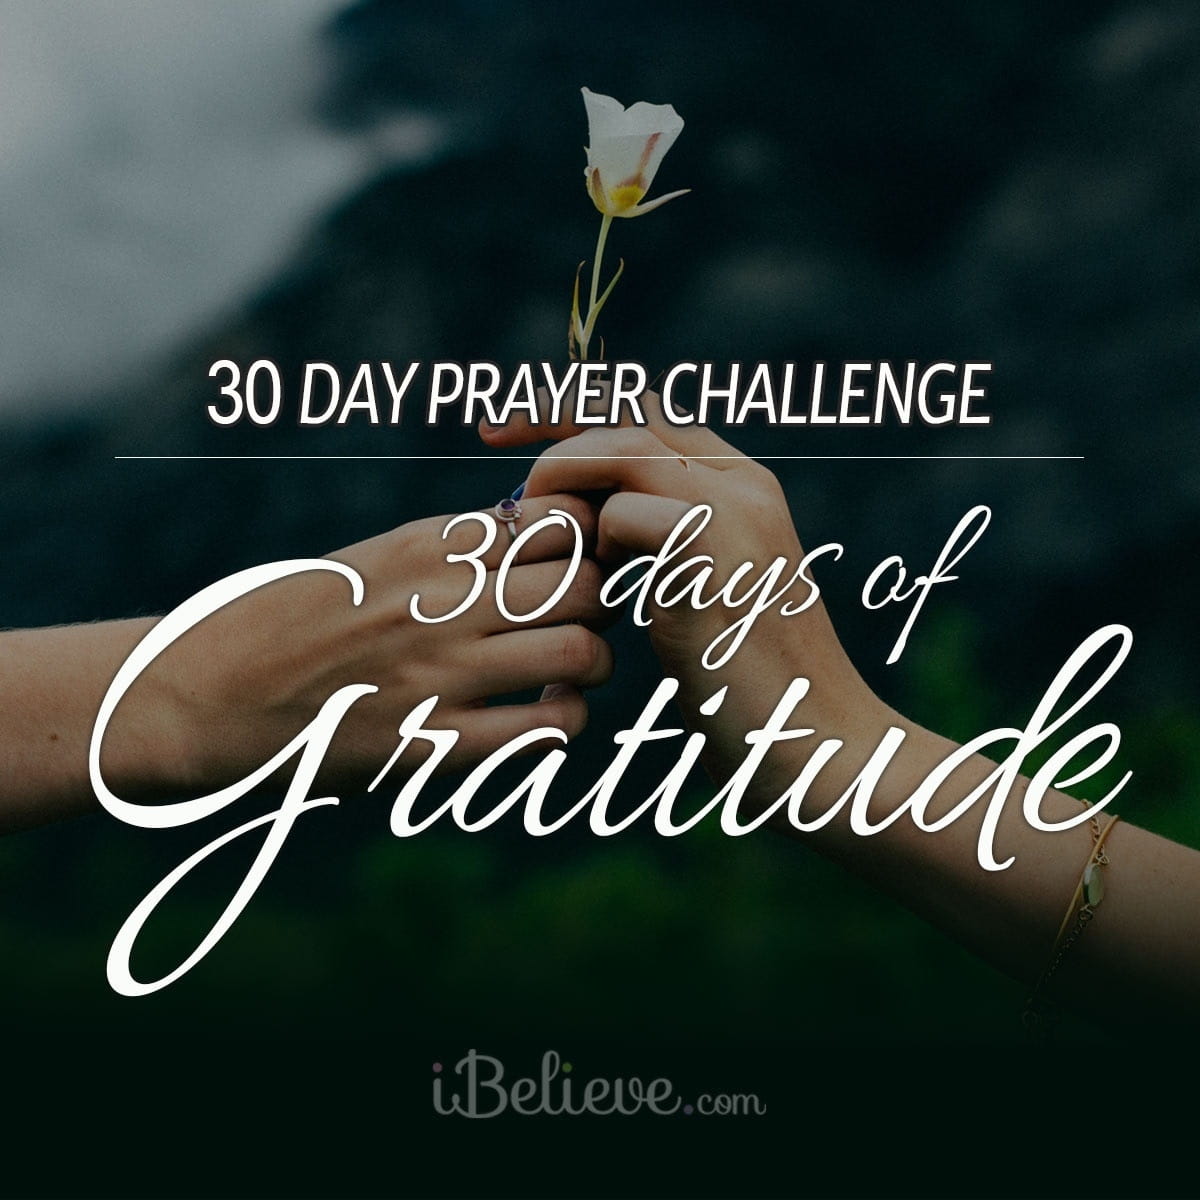 Our 30 Days of Gratitude Prayer Challenge